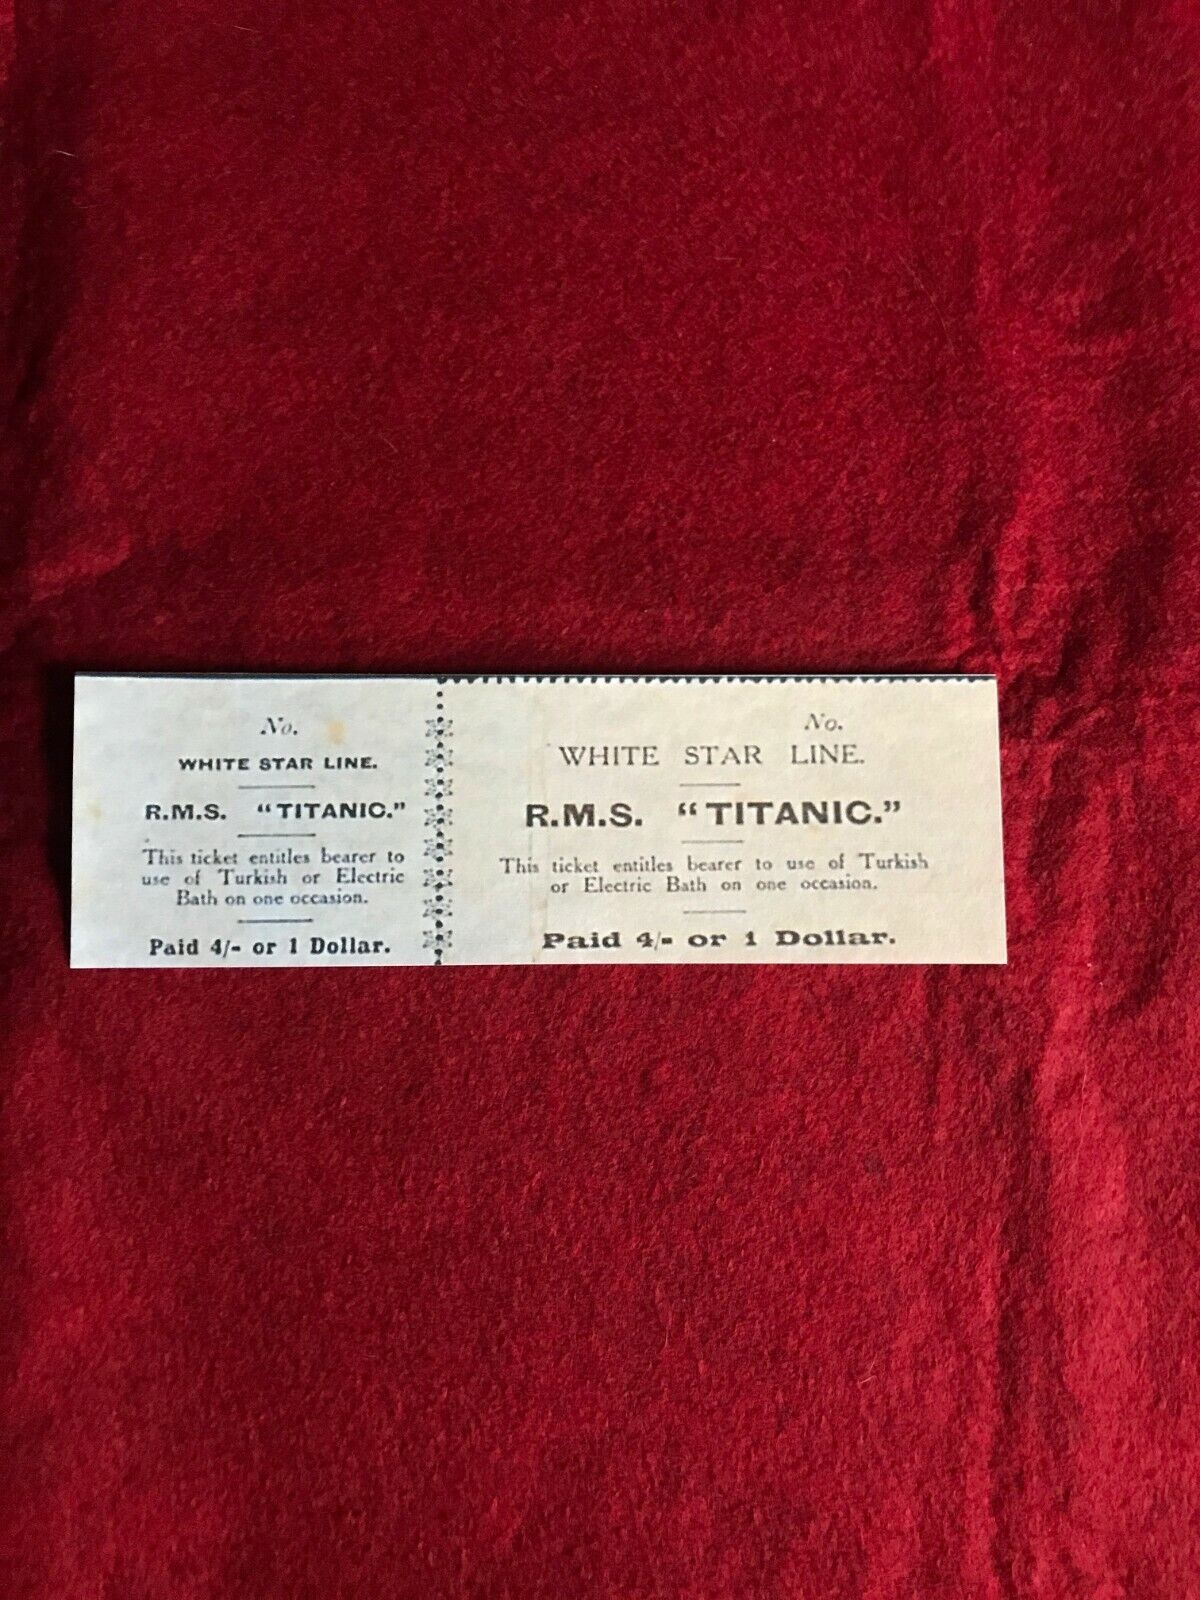 RMS TITANIC TURKISH BATHS TICKET- BEAUTIFUL REPLICA- ON CARD STOCK -1912